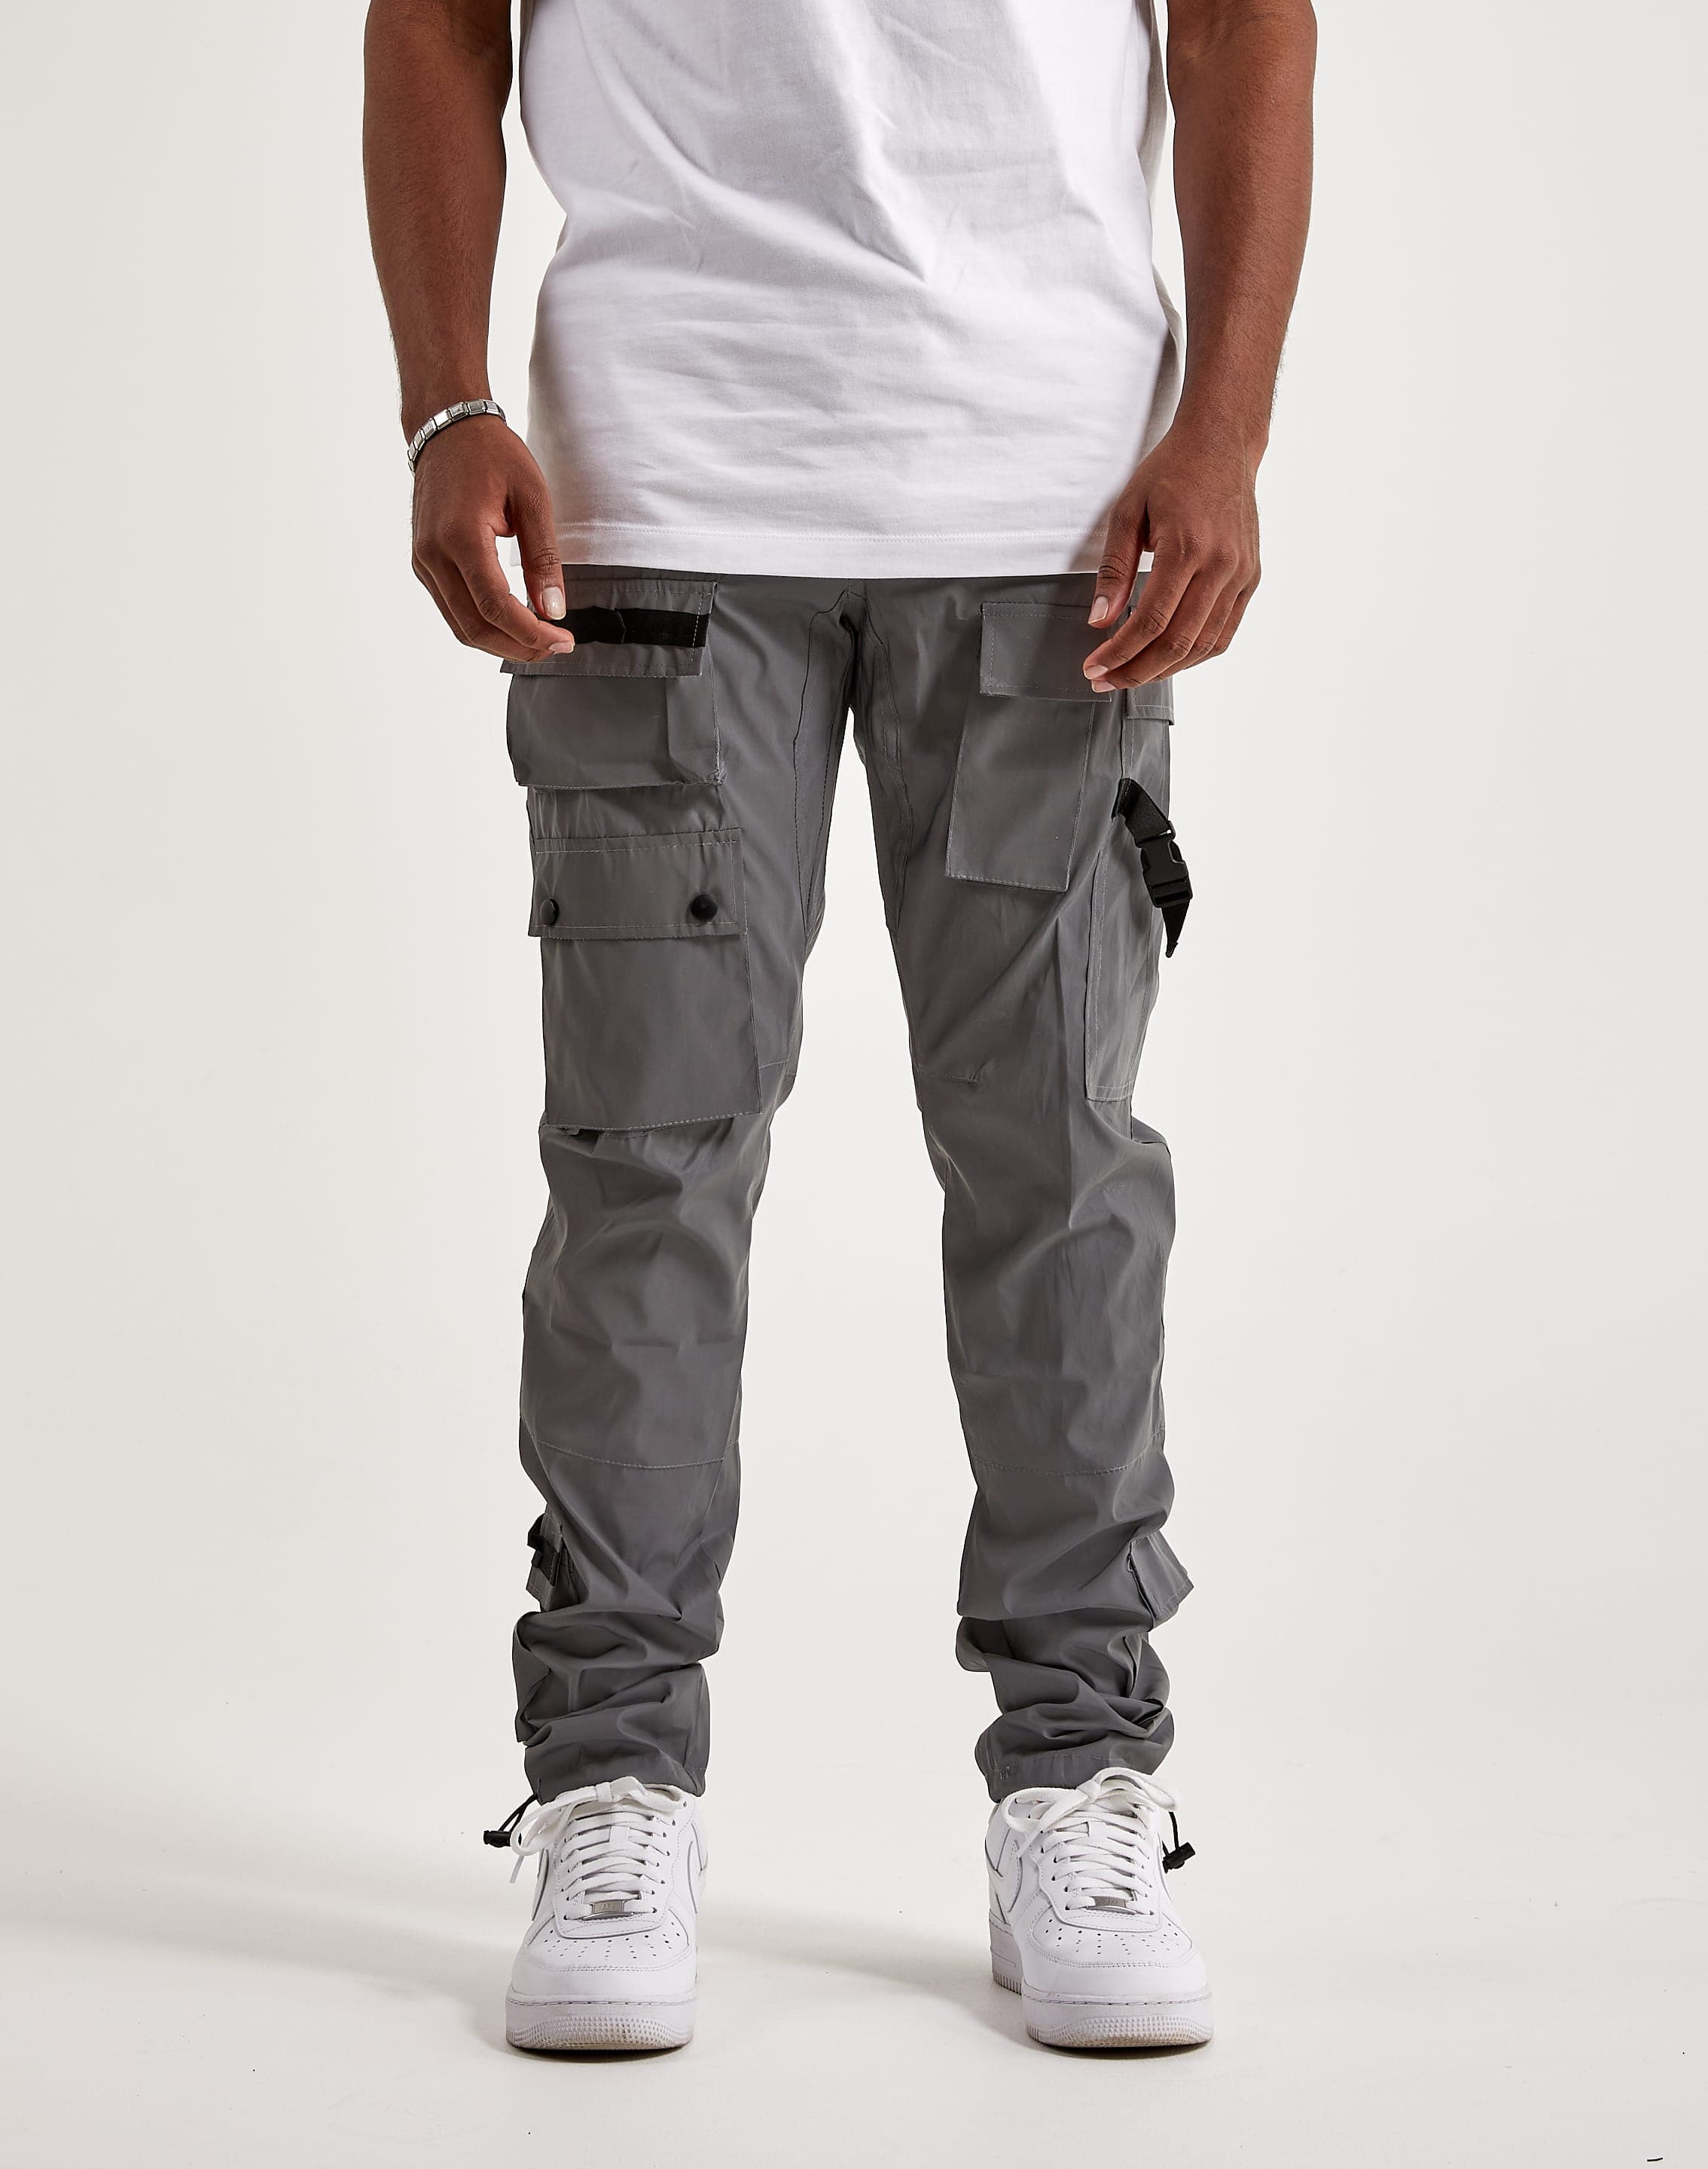 Buy Black Trousers & Pants for Men by Celio Online | Ajio.com